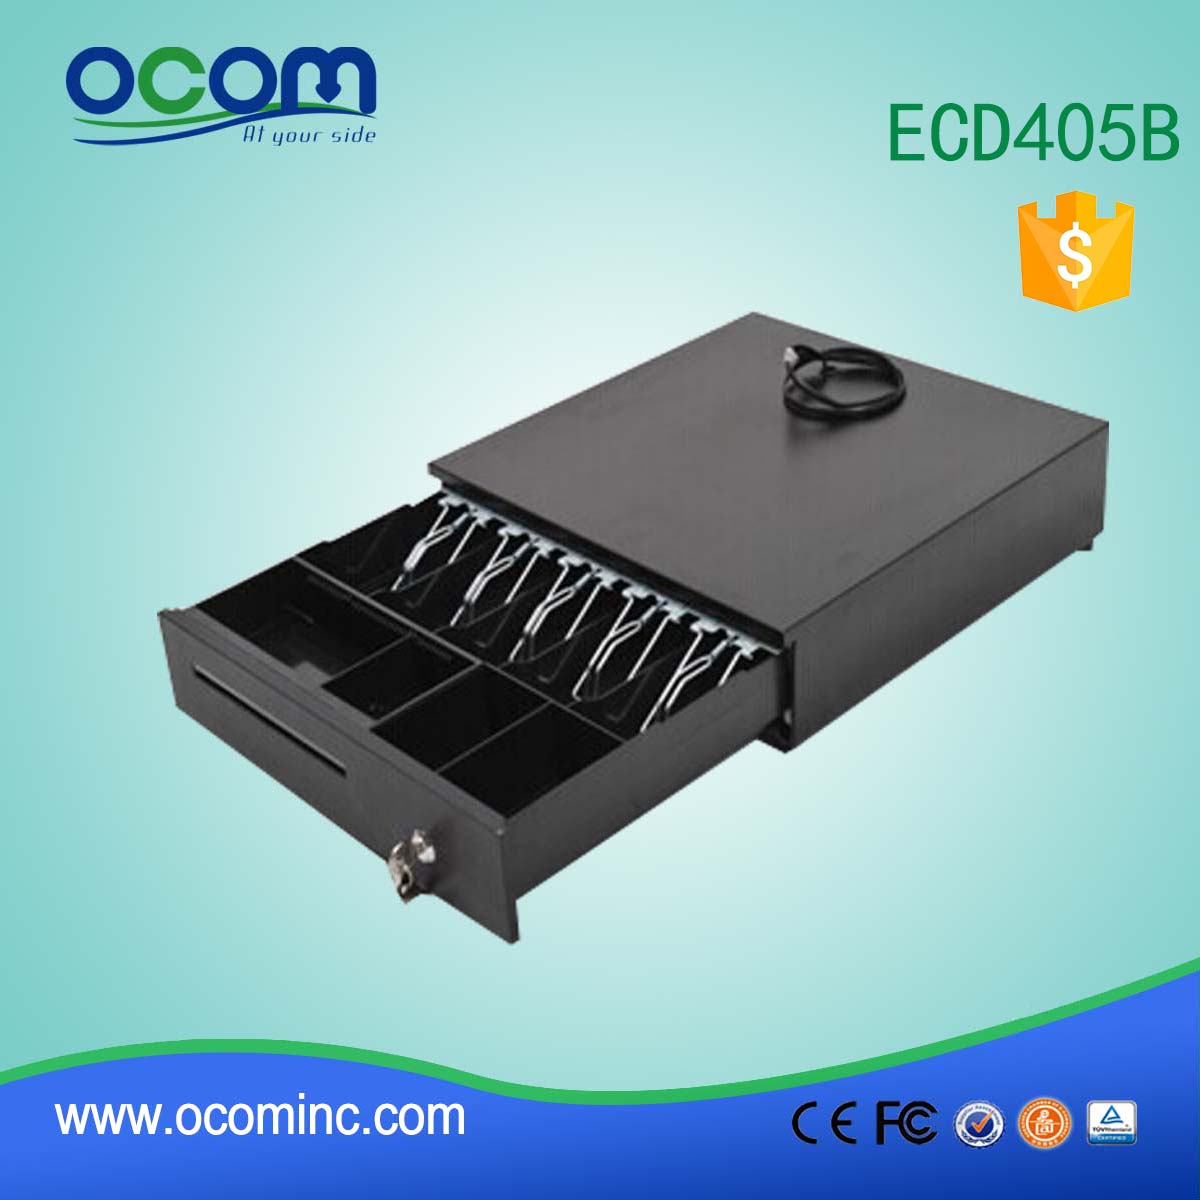 ECD405B Black Removable Cash/Coin tray 405mm POS Cash Drawer